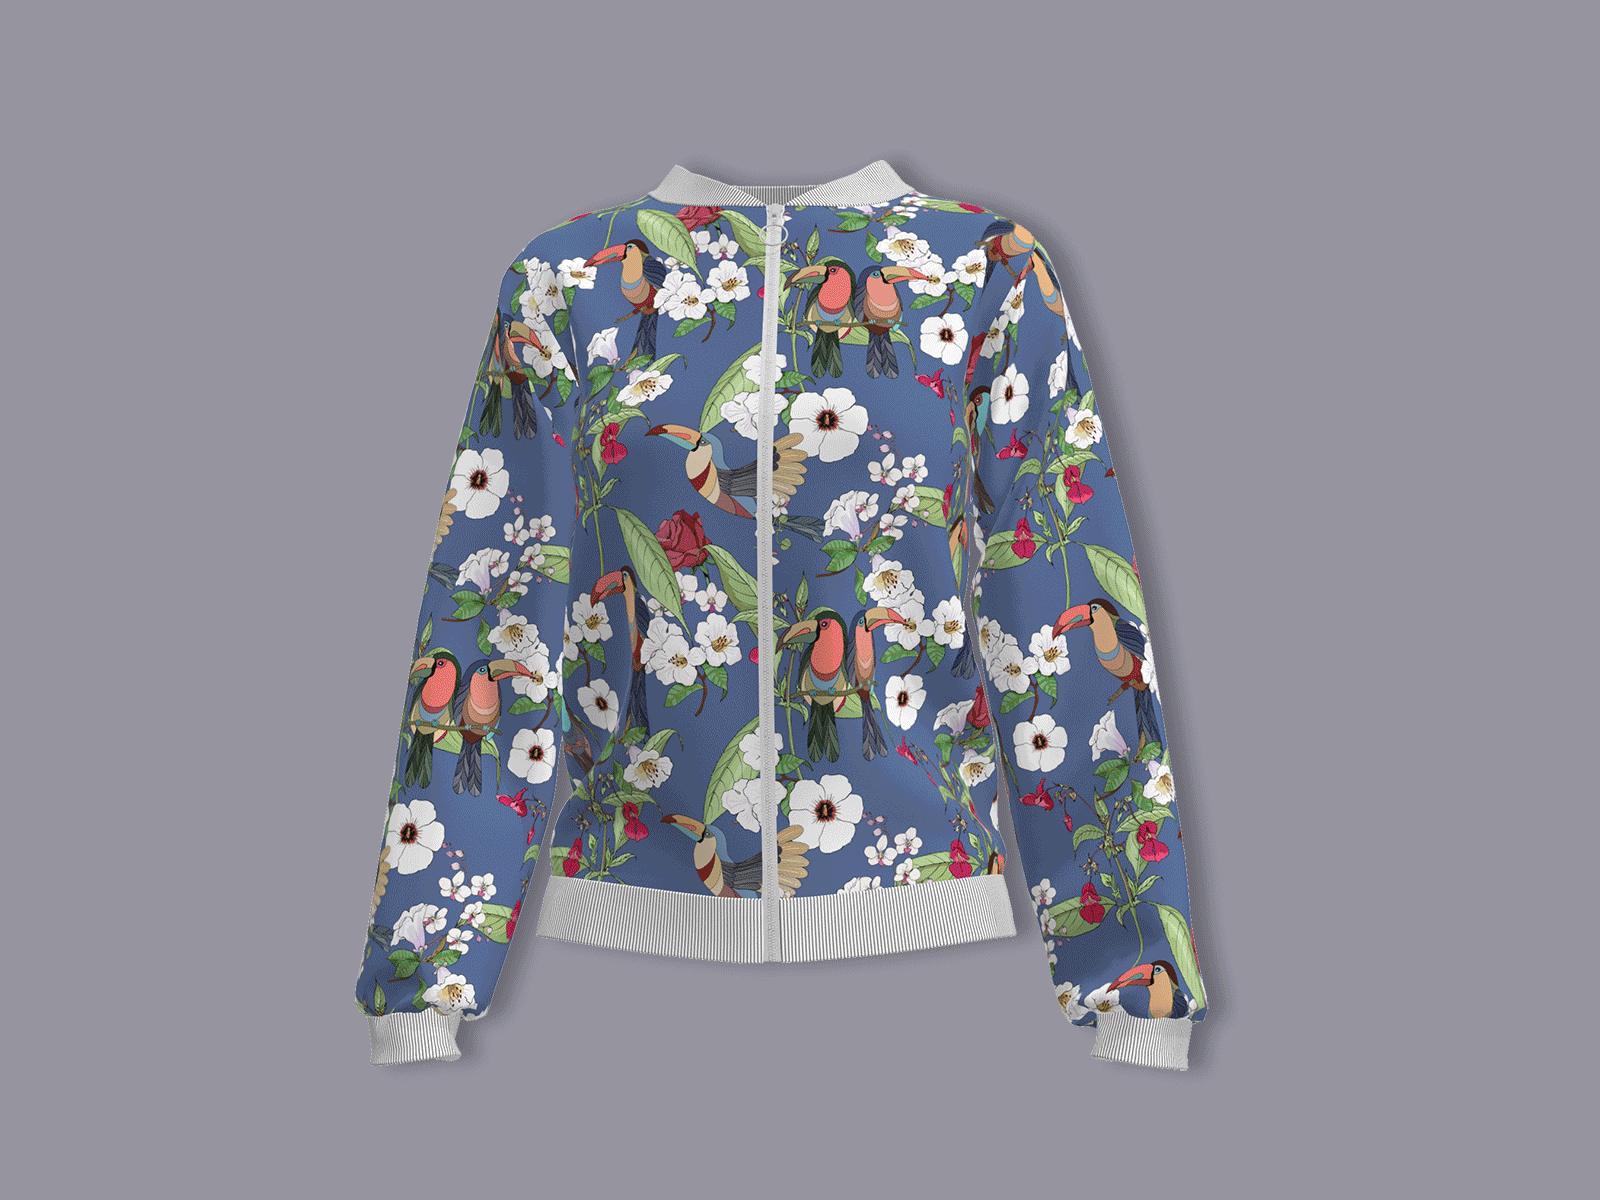 Design for fabric on 3D model sweatshirts 3d apparel botanical fashion fast floral pattern flowers pattern pattern design print surface pattern textile design textile pattern textile print